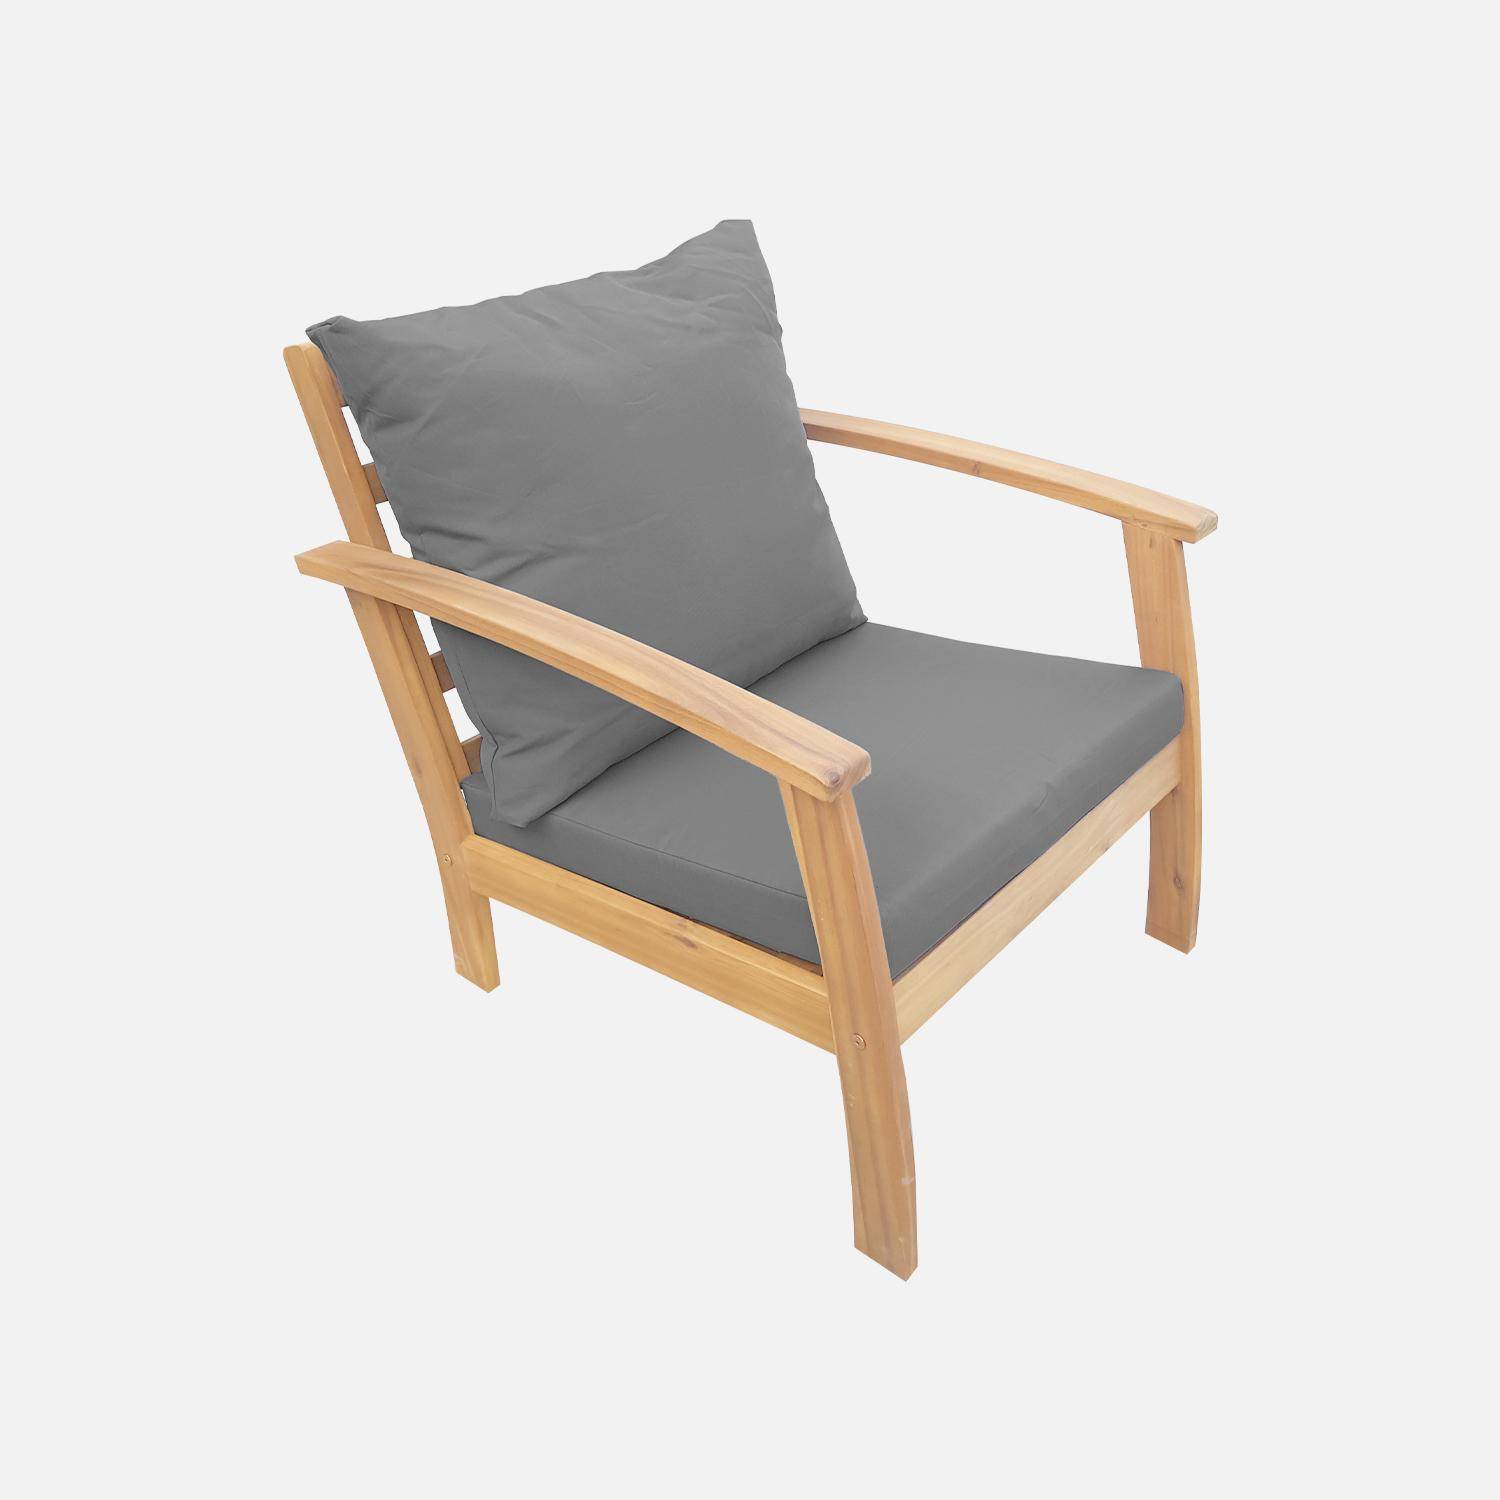 4-seater wooden garden sofa - Acacia wood sofa, armchairs and coffee table, designer piece  - Ushuaia - Grey,sweeek,Photo4